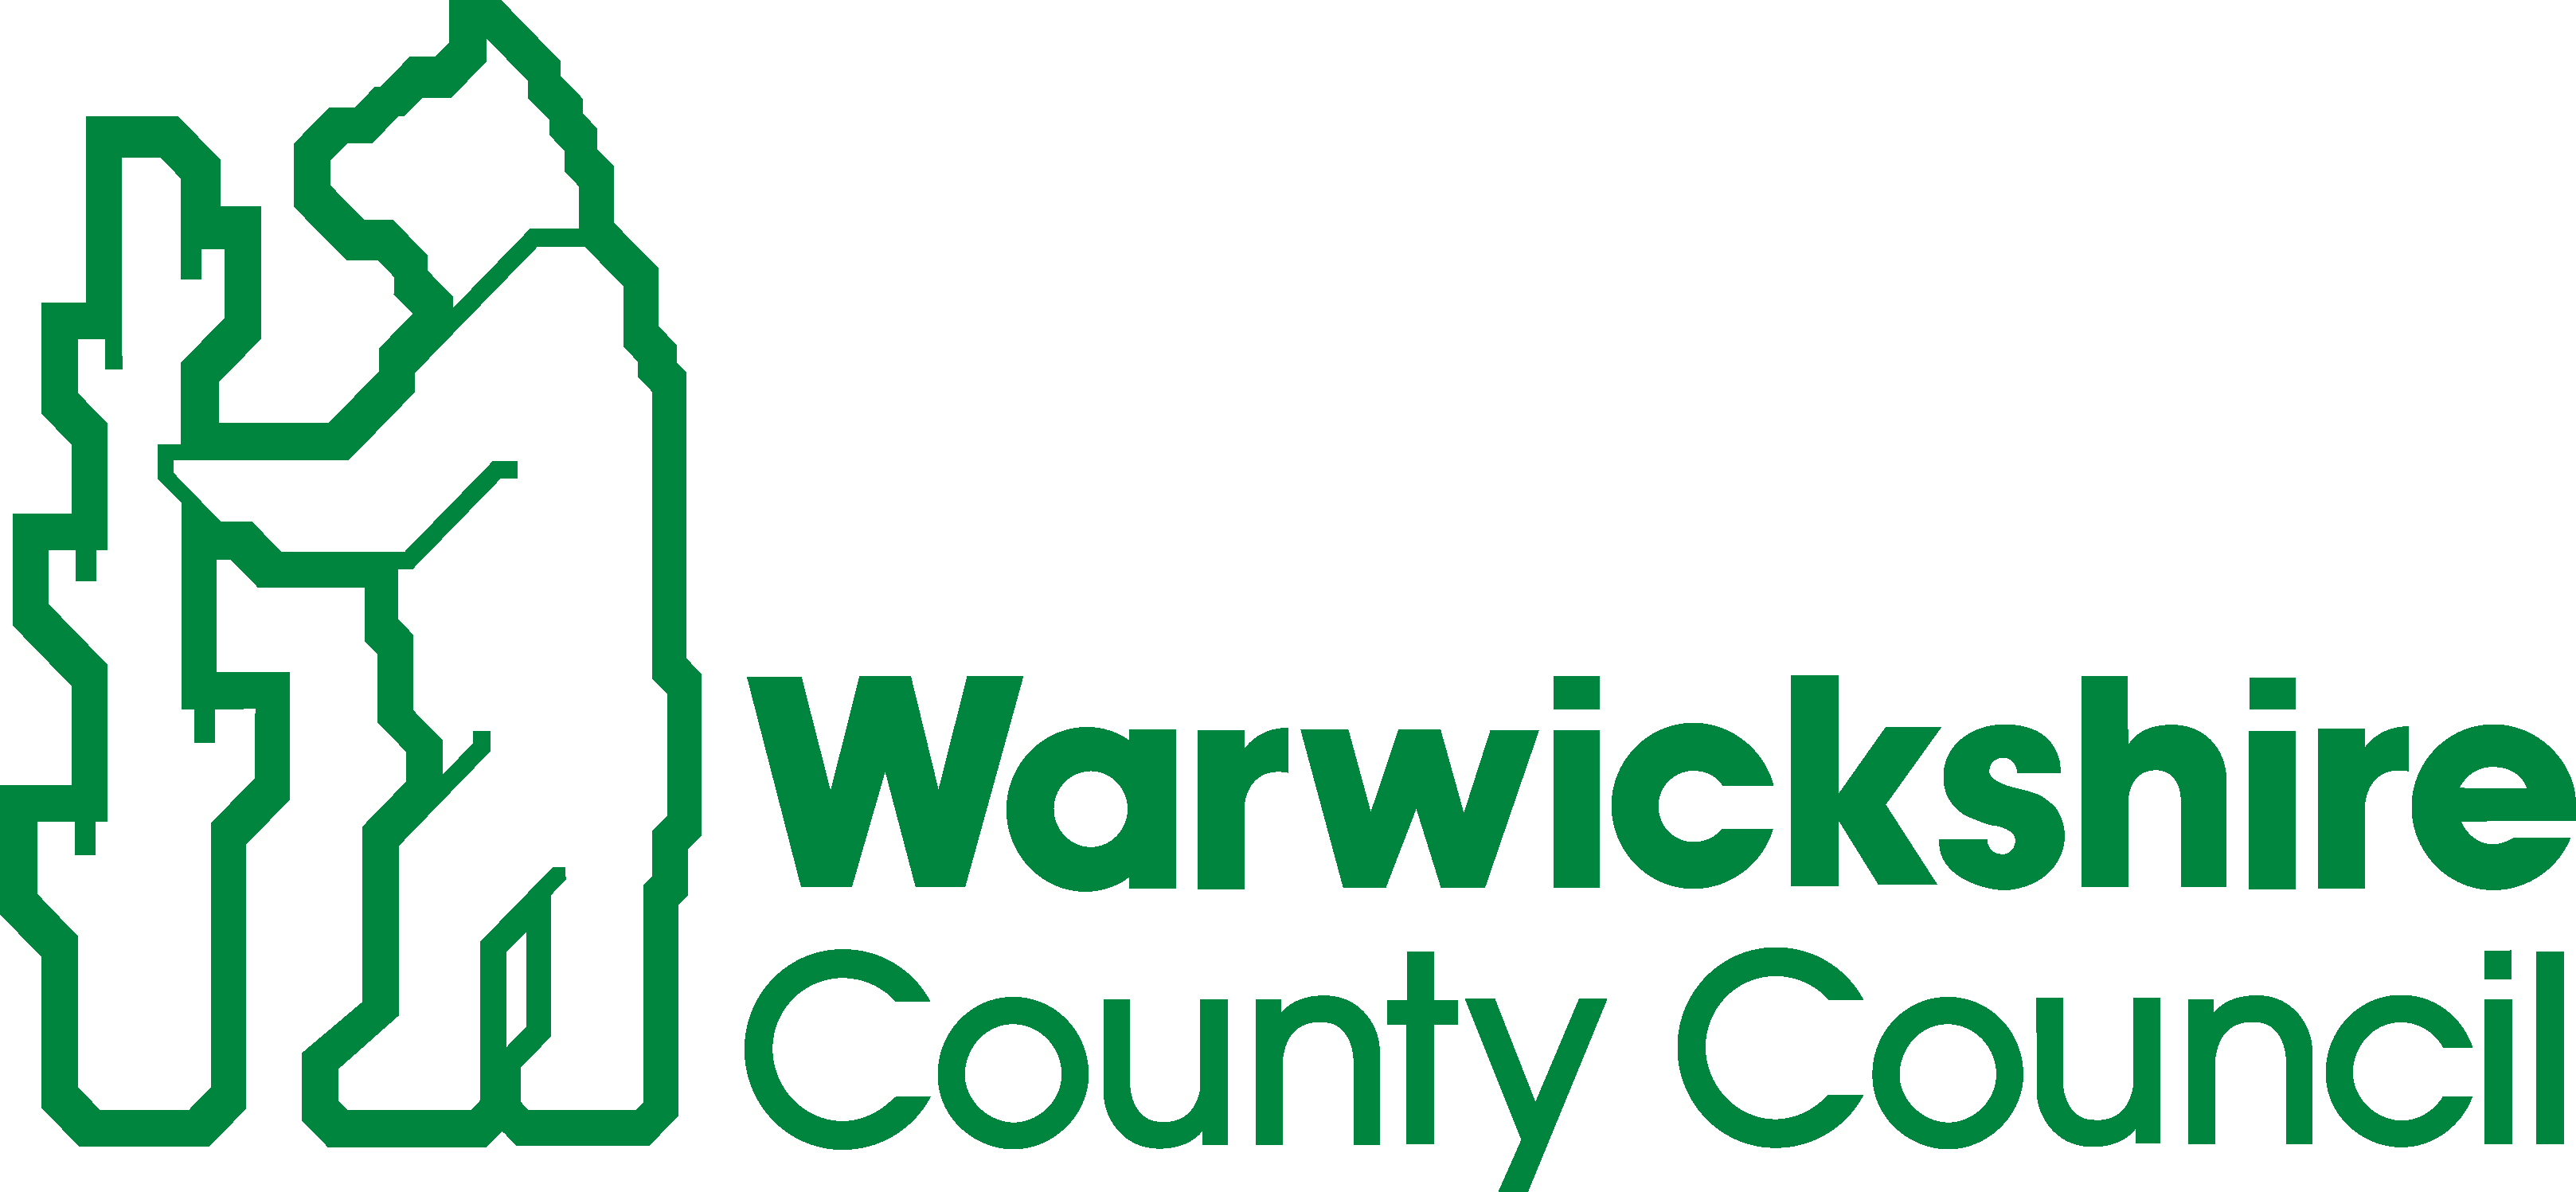 Warwickshire County Council-1